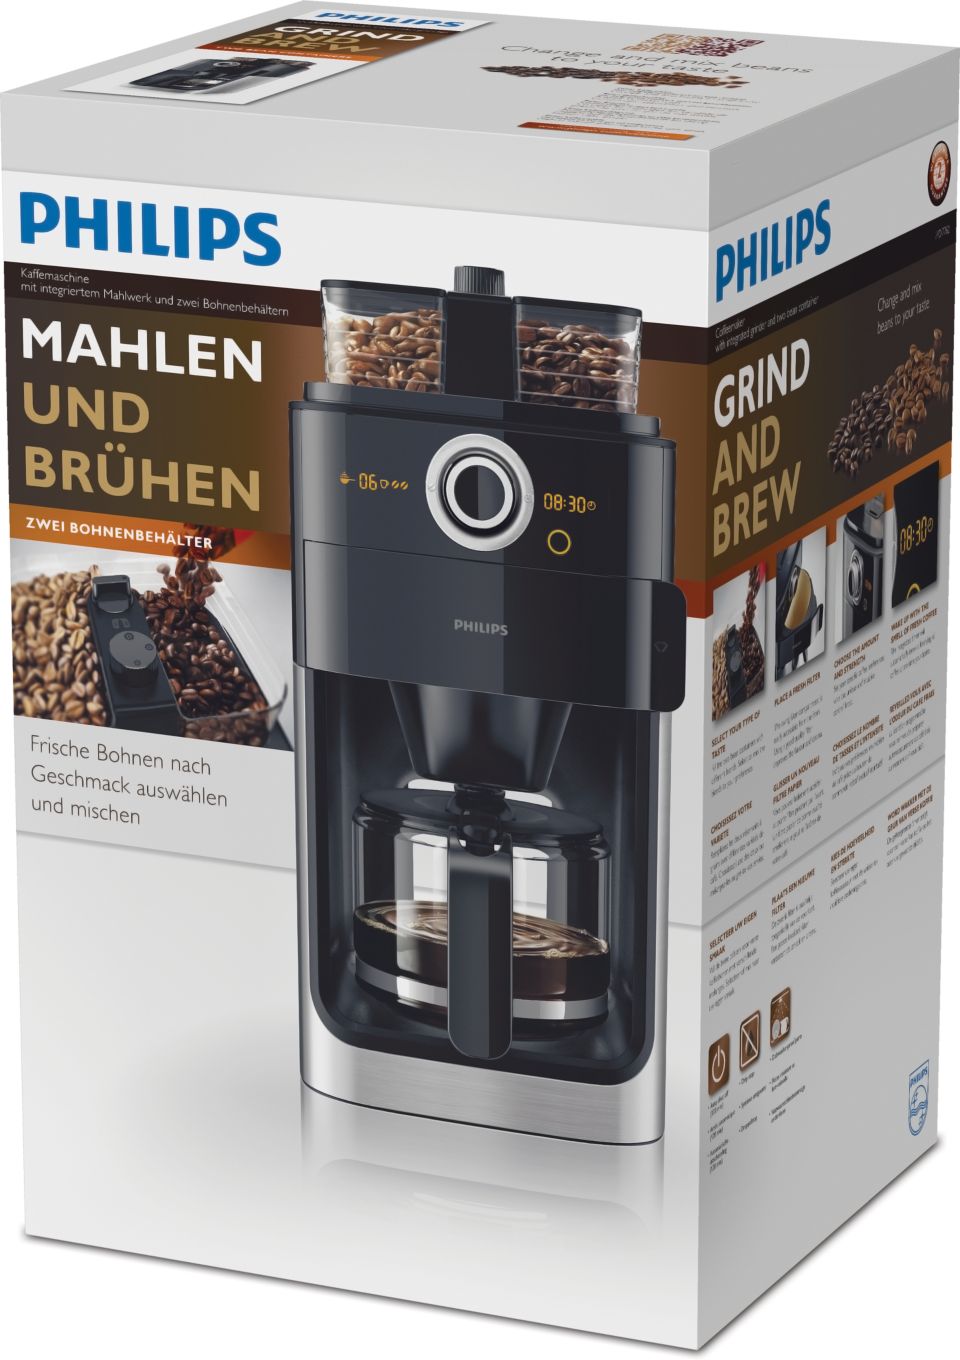 Grind Coffee Brew Philips | HD7762/00 & maker